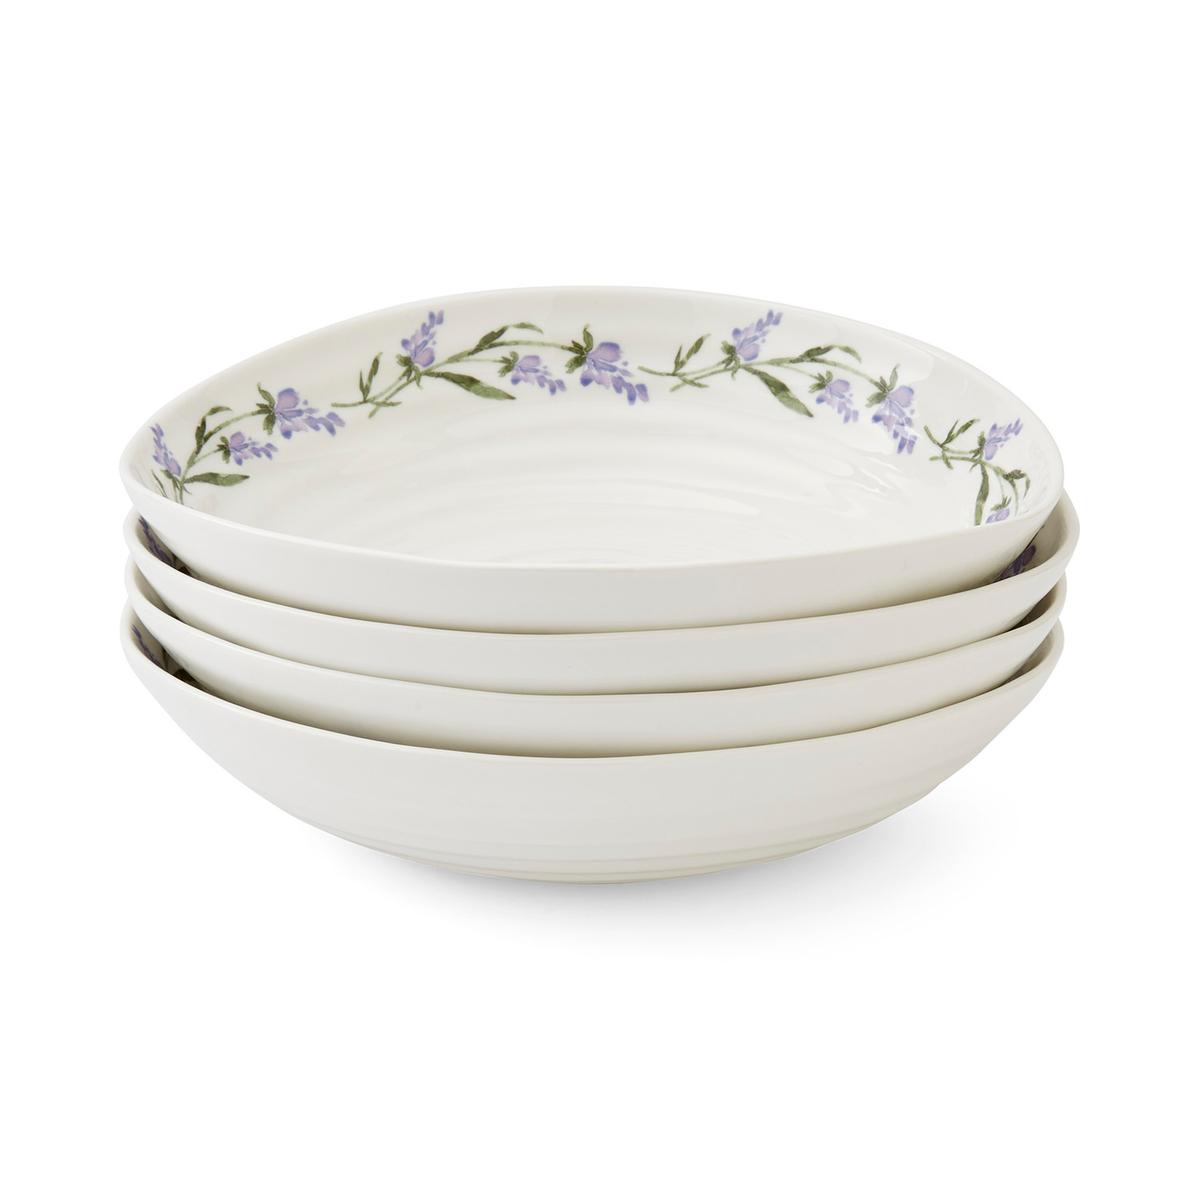 Sophie Conran White Pasta Bowls Set of 4